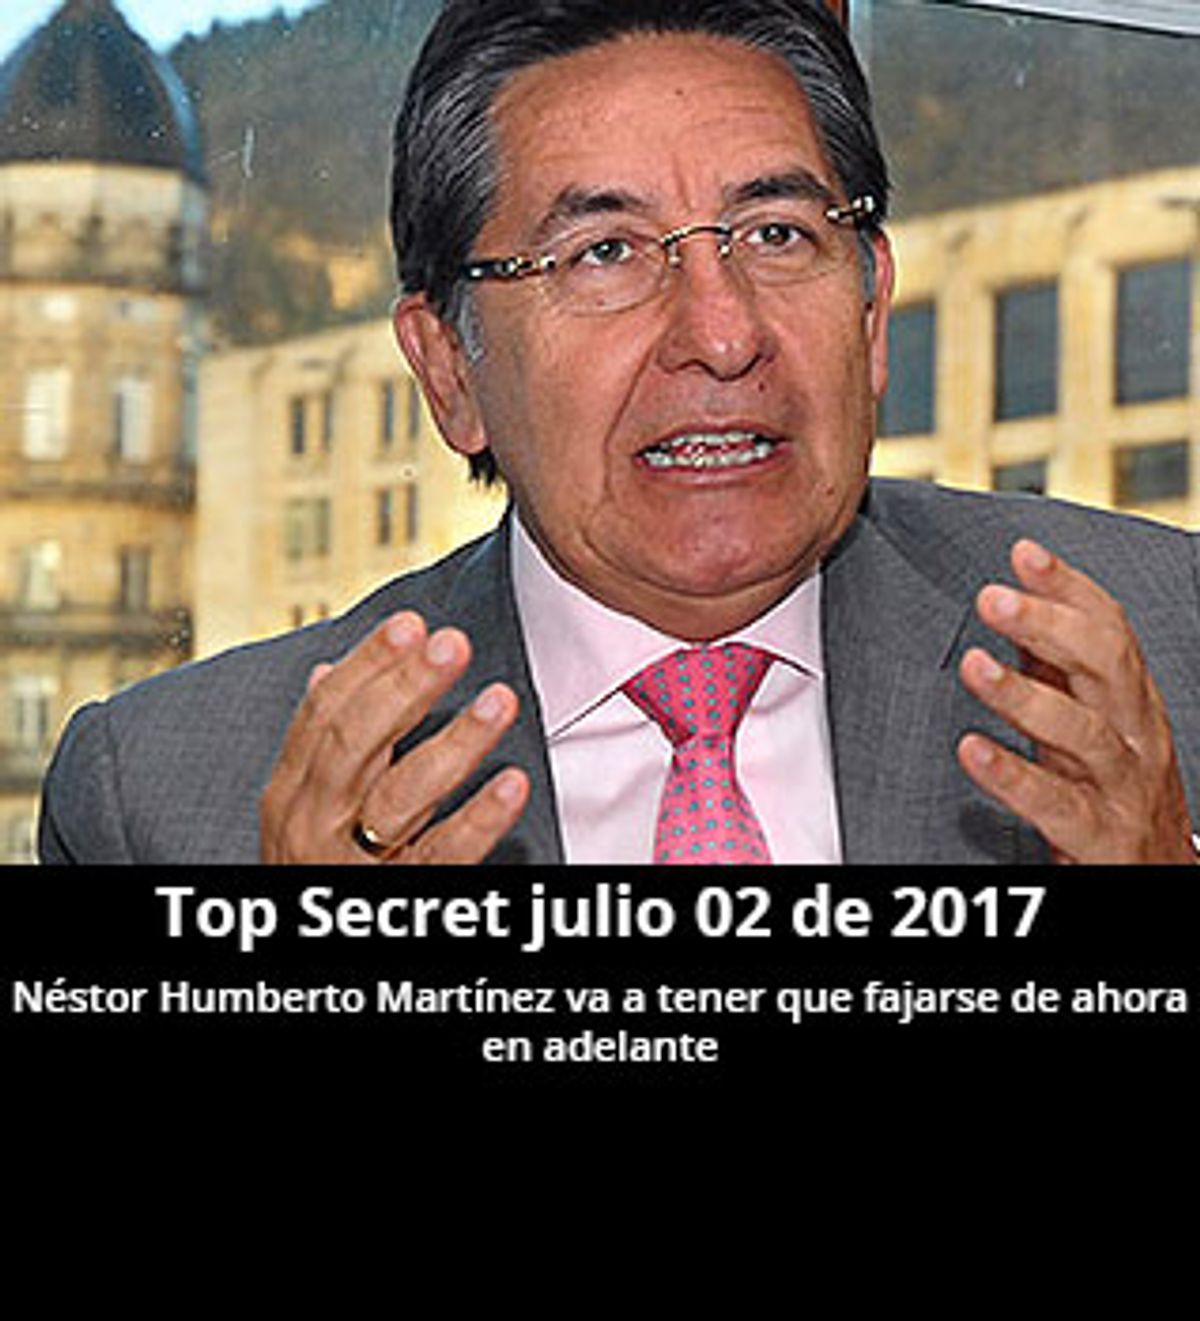 Top Secret julio 02 de 2017